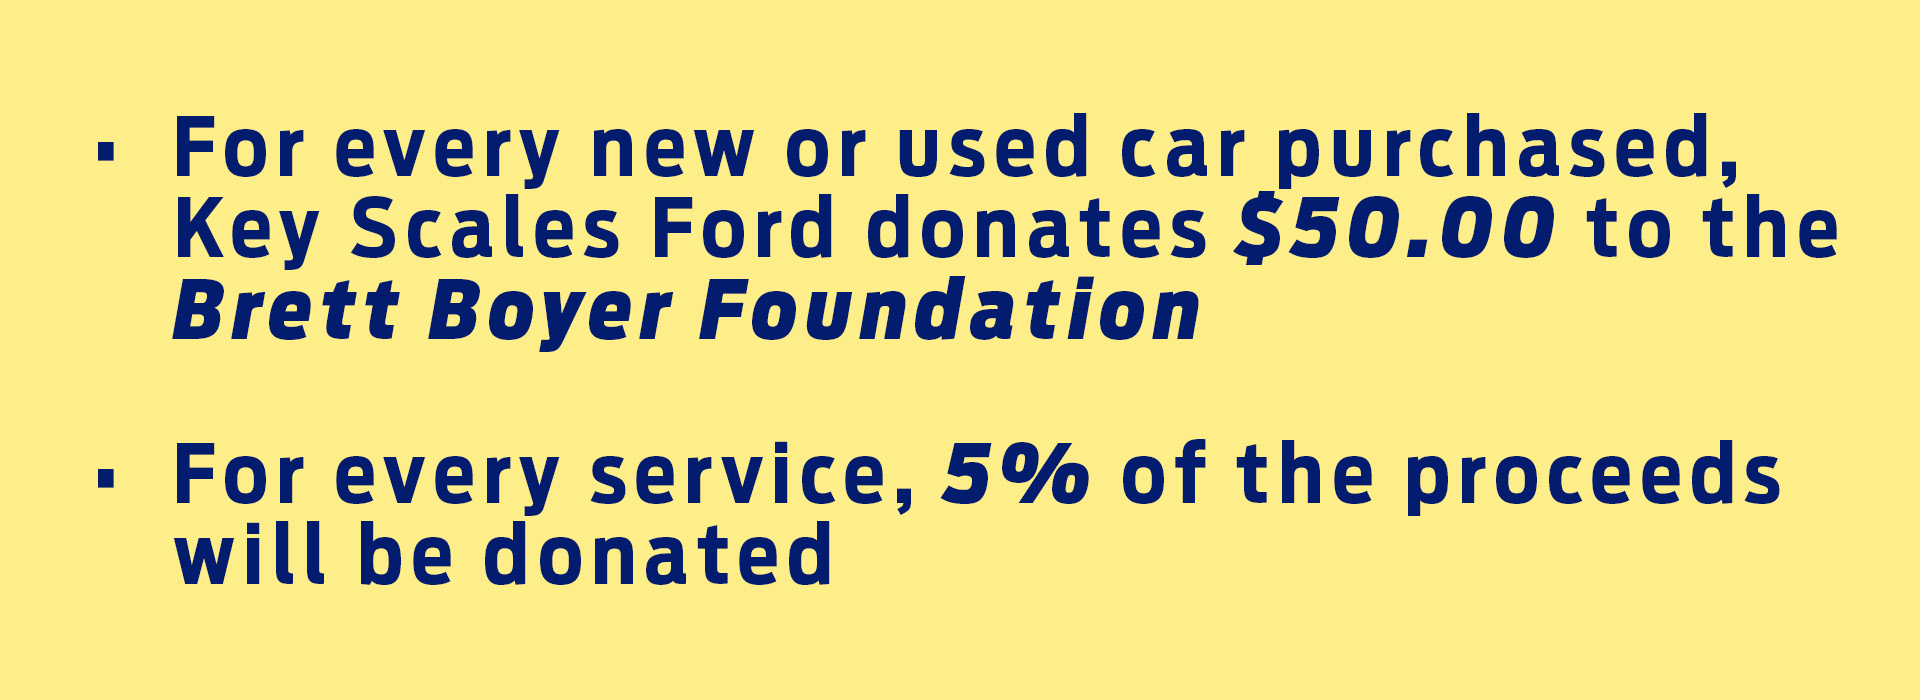 Brett Boyer Key Scales Ford Donations